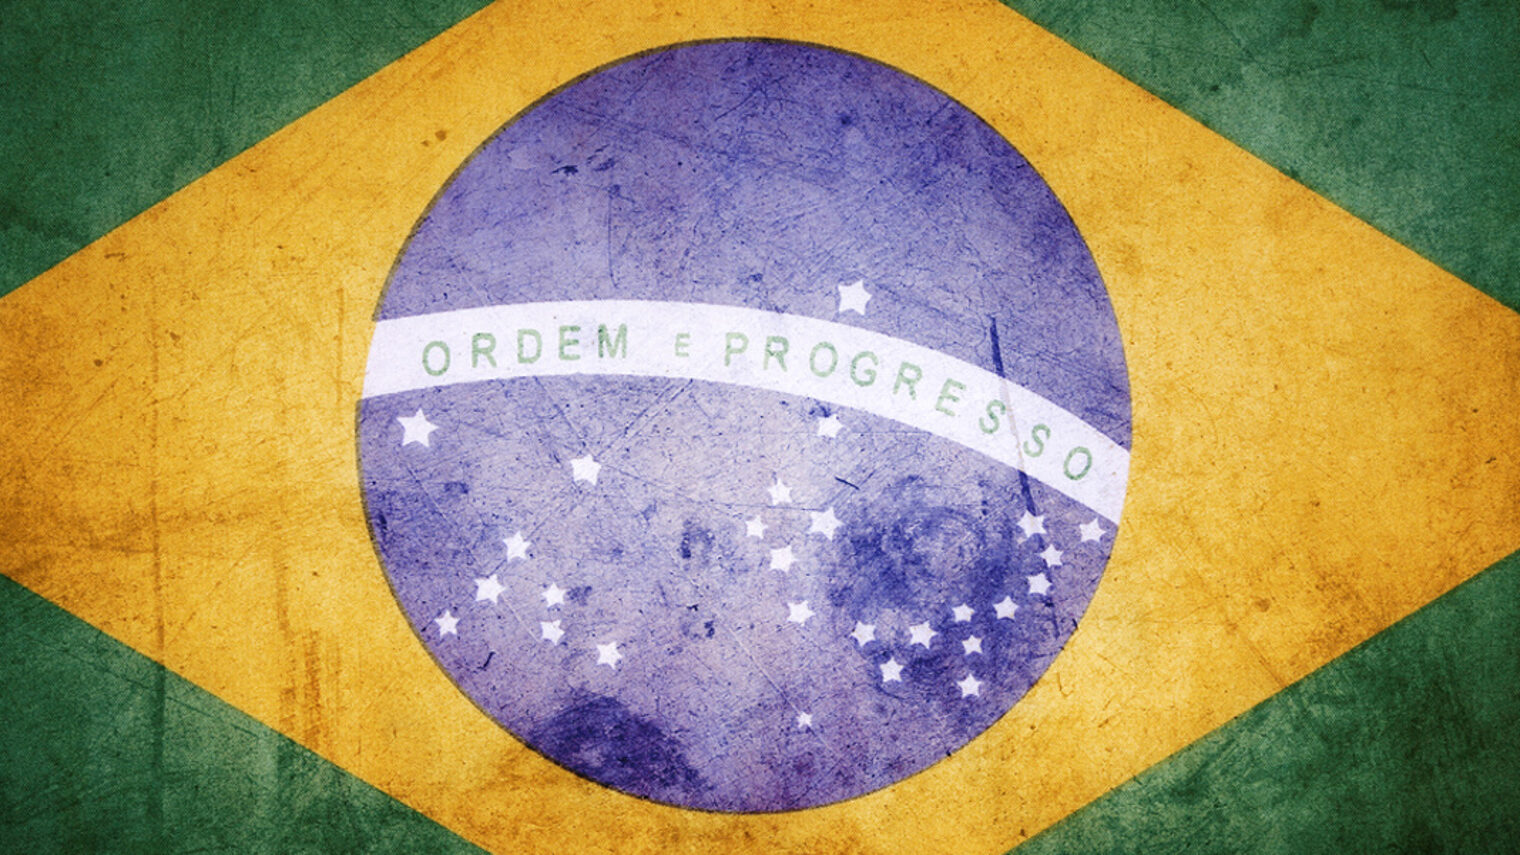 Closeup of grunge Brazilian flag Schlagwort(e): brazil, brazilian, country, flag, green, national, nobody, patriotism, photo, photograph, symbol, symbolic, brasil, emblem, design, nation, patriotic, patriot, closeup, macro, object, close, detail, vintage, grunge, old, aged, retro, grungy, brazil, brazilian, country, flag, green, national, nobody, patriotism, photo, photograph, symbol, symbolic, brasil, emblem, design, nation, patriotic, patriot, closeup, macro, object, close, detail, vintage, grunge, old, aged, retro, grungy